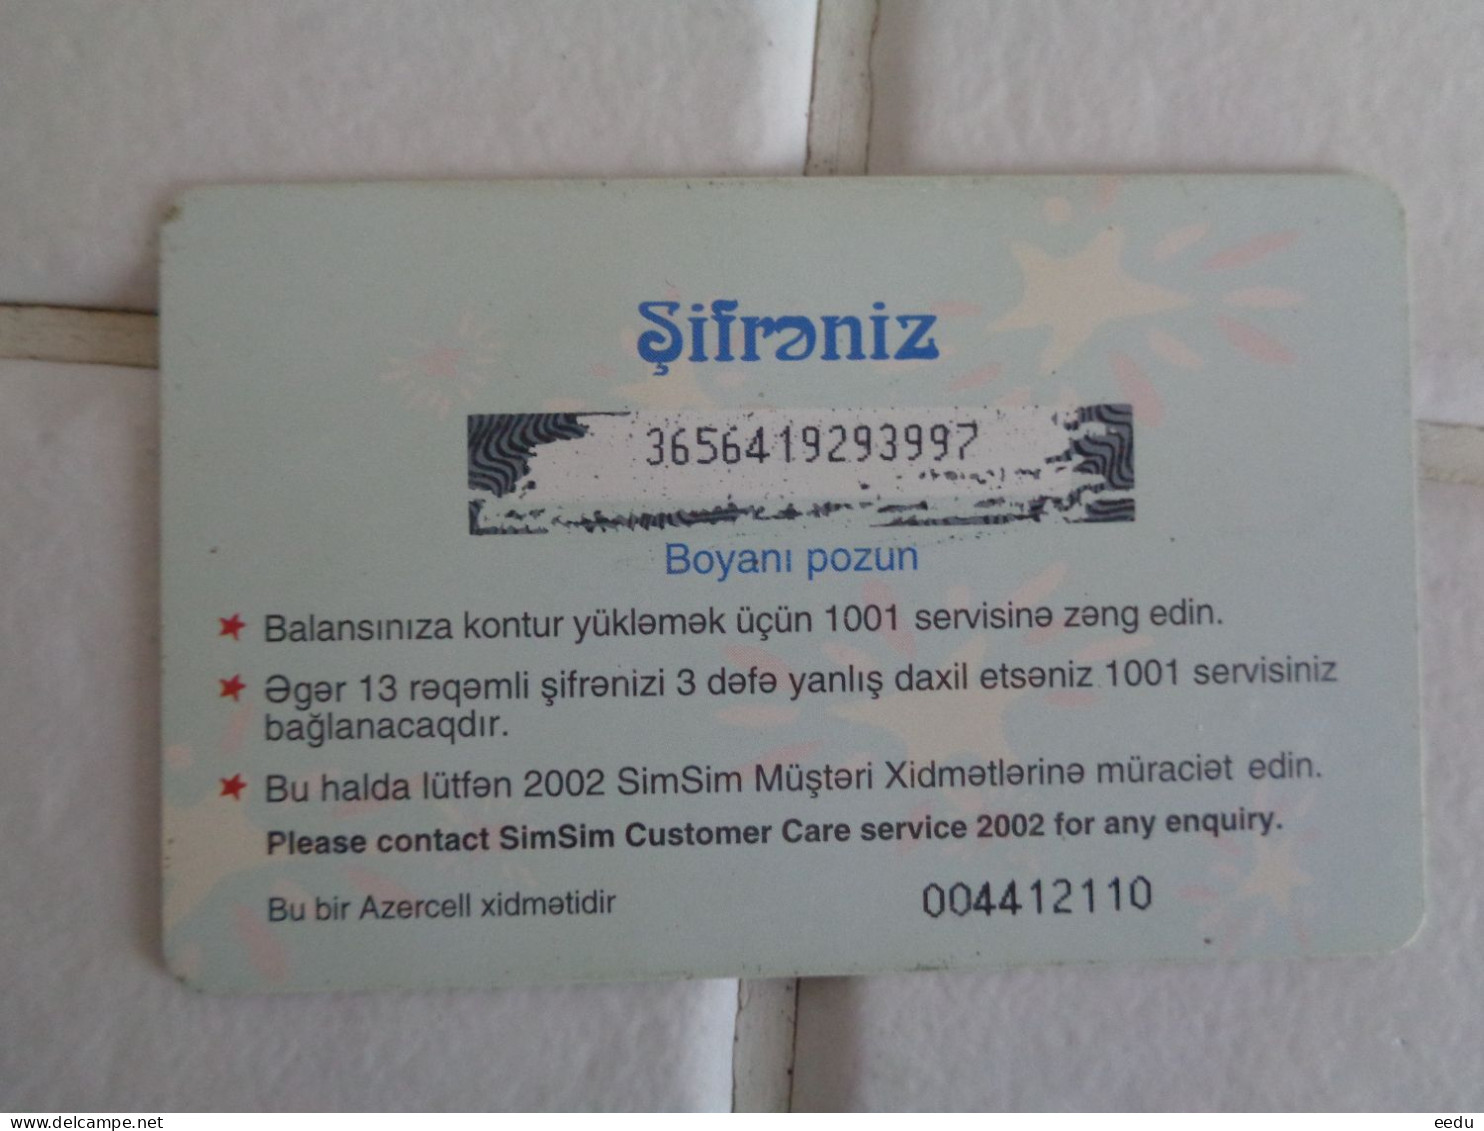 Azerbaijan Phonecard - Aserbaidschan